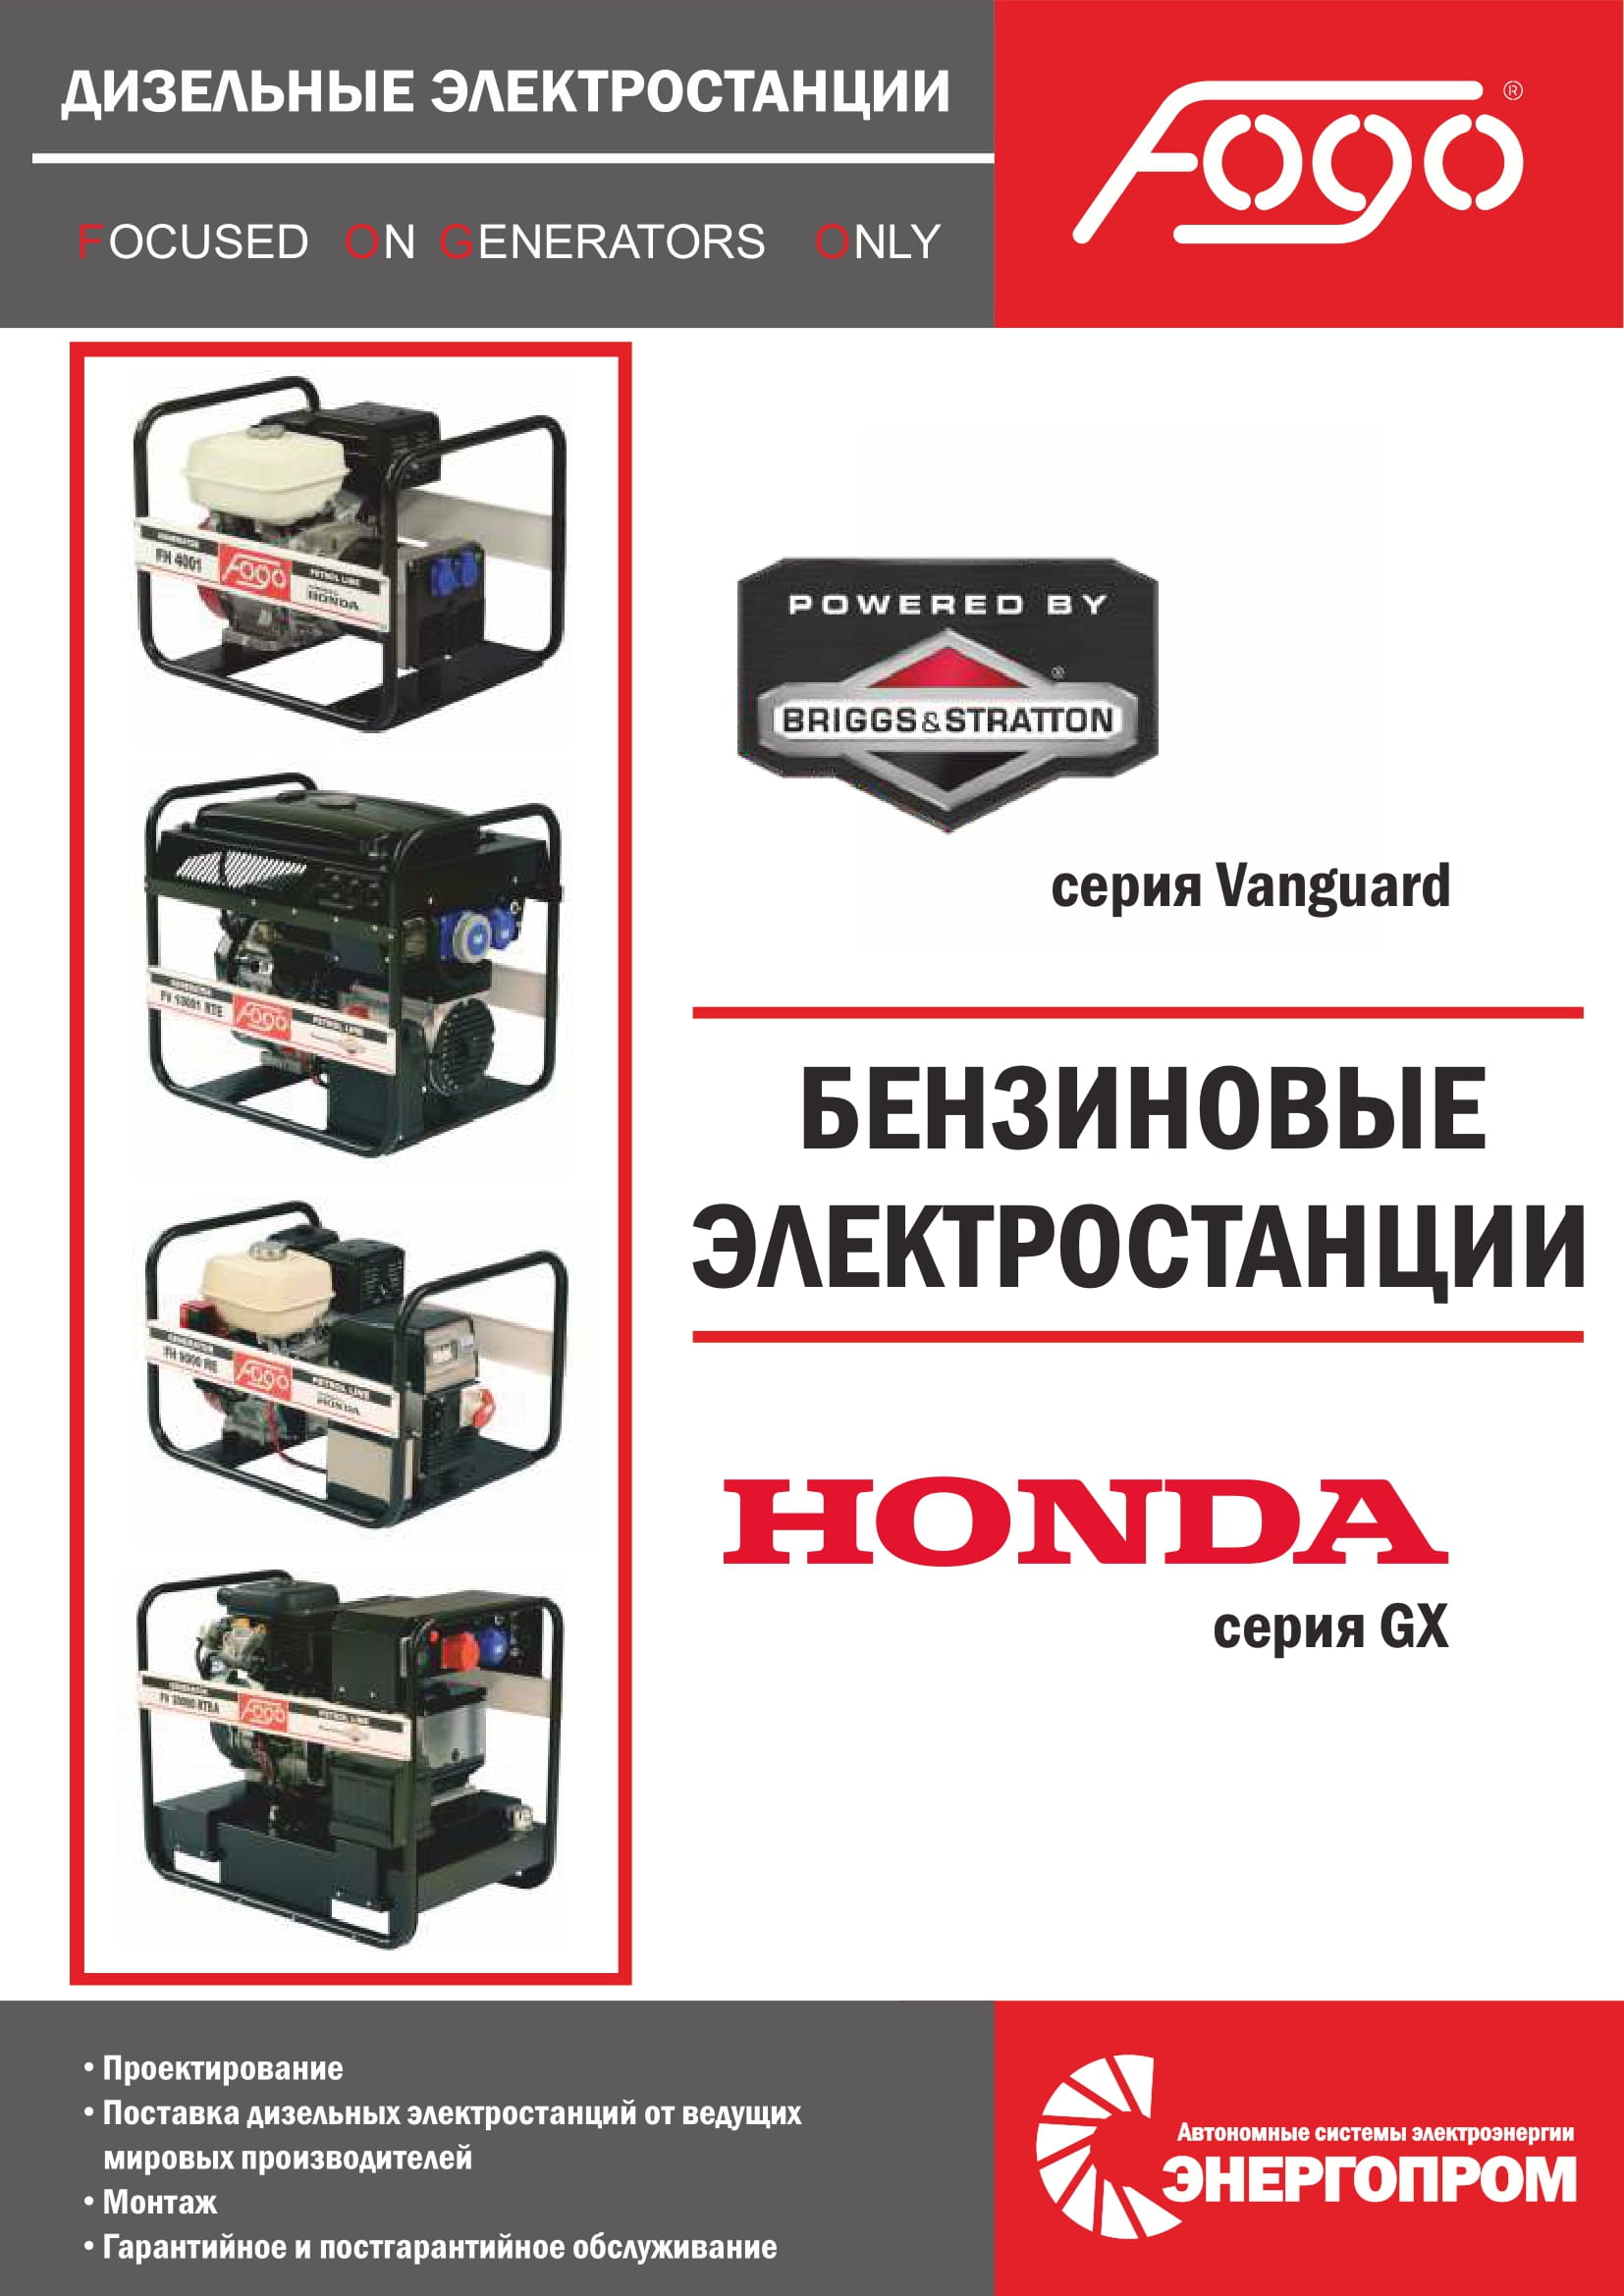 Honda, Vanguard